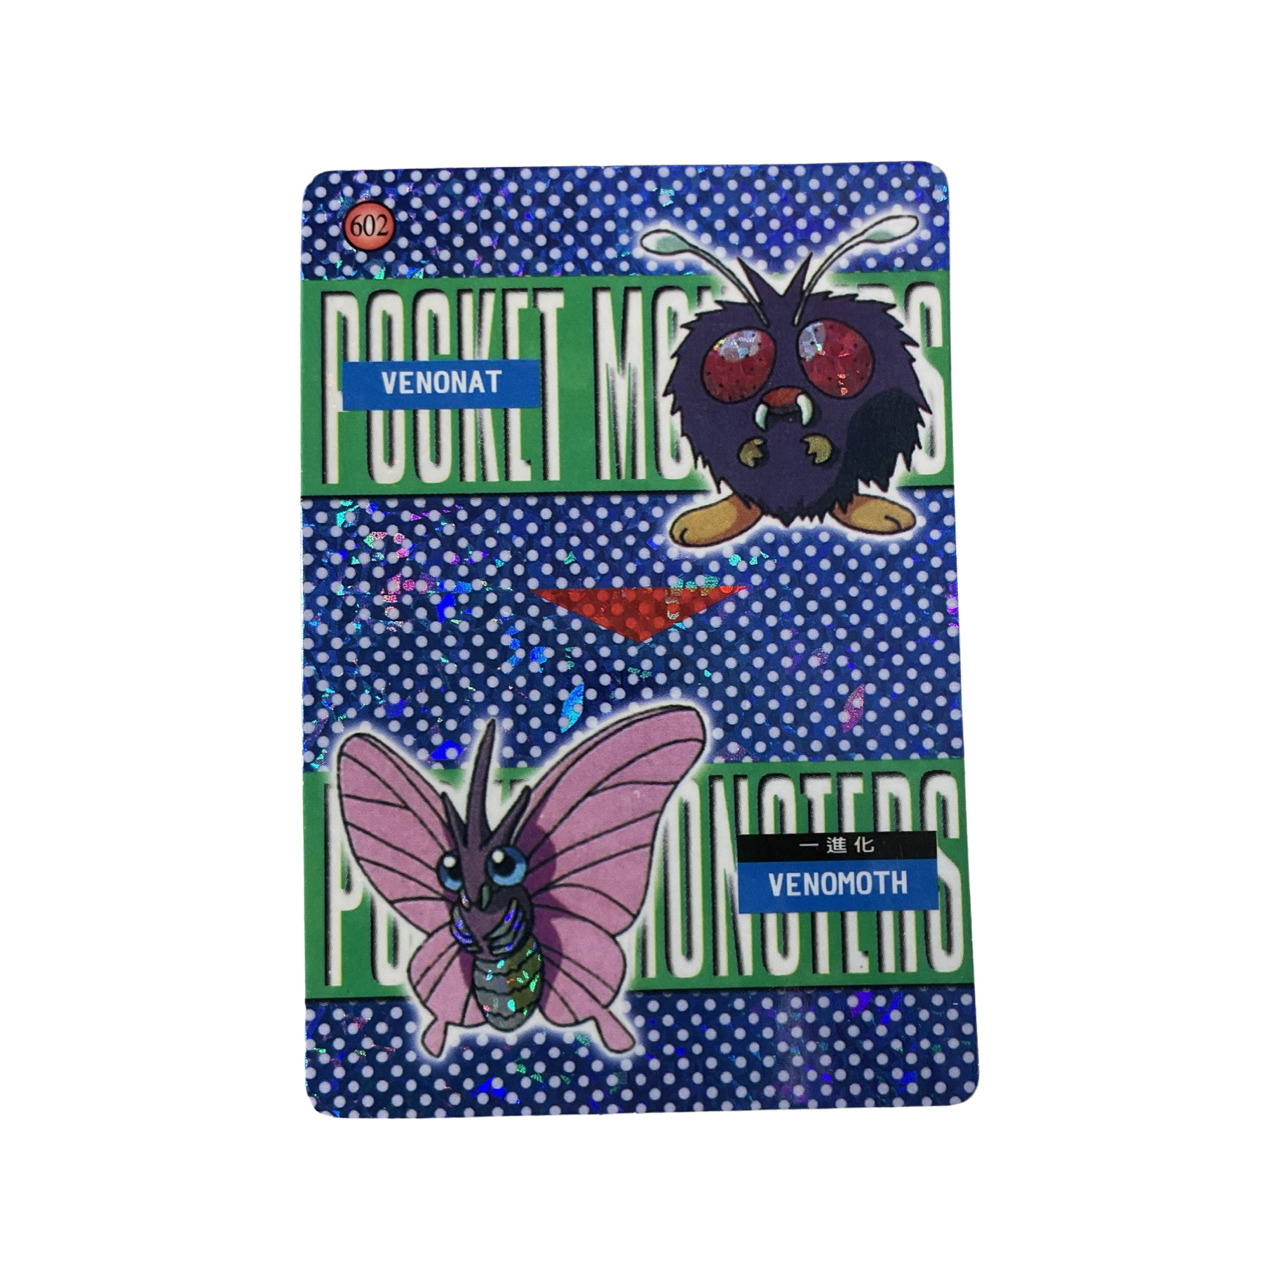 Venonat/Venomoth 602 Pocket Monsters Vending Machine Sticker Card (mint)